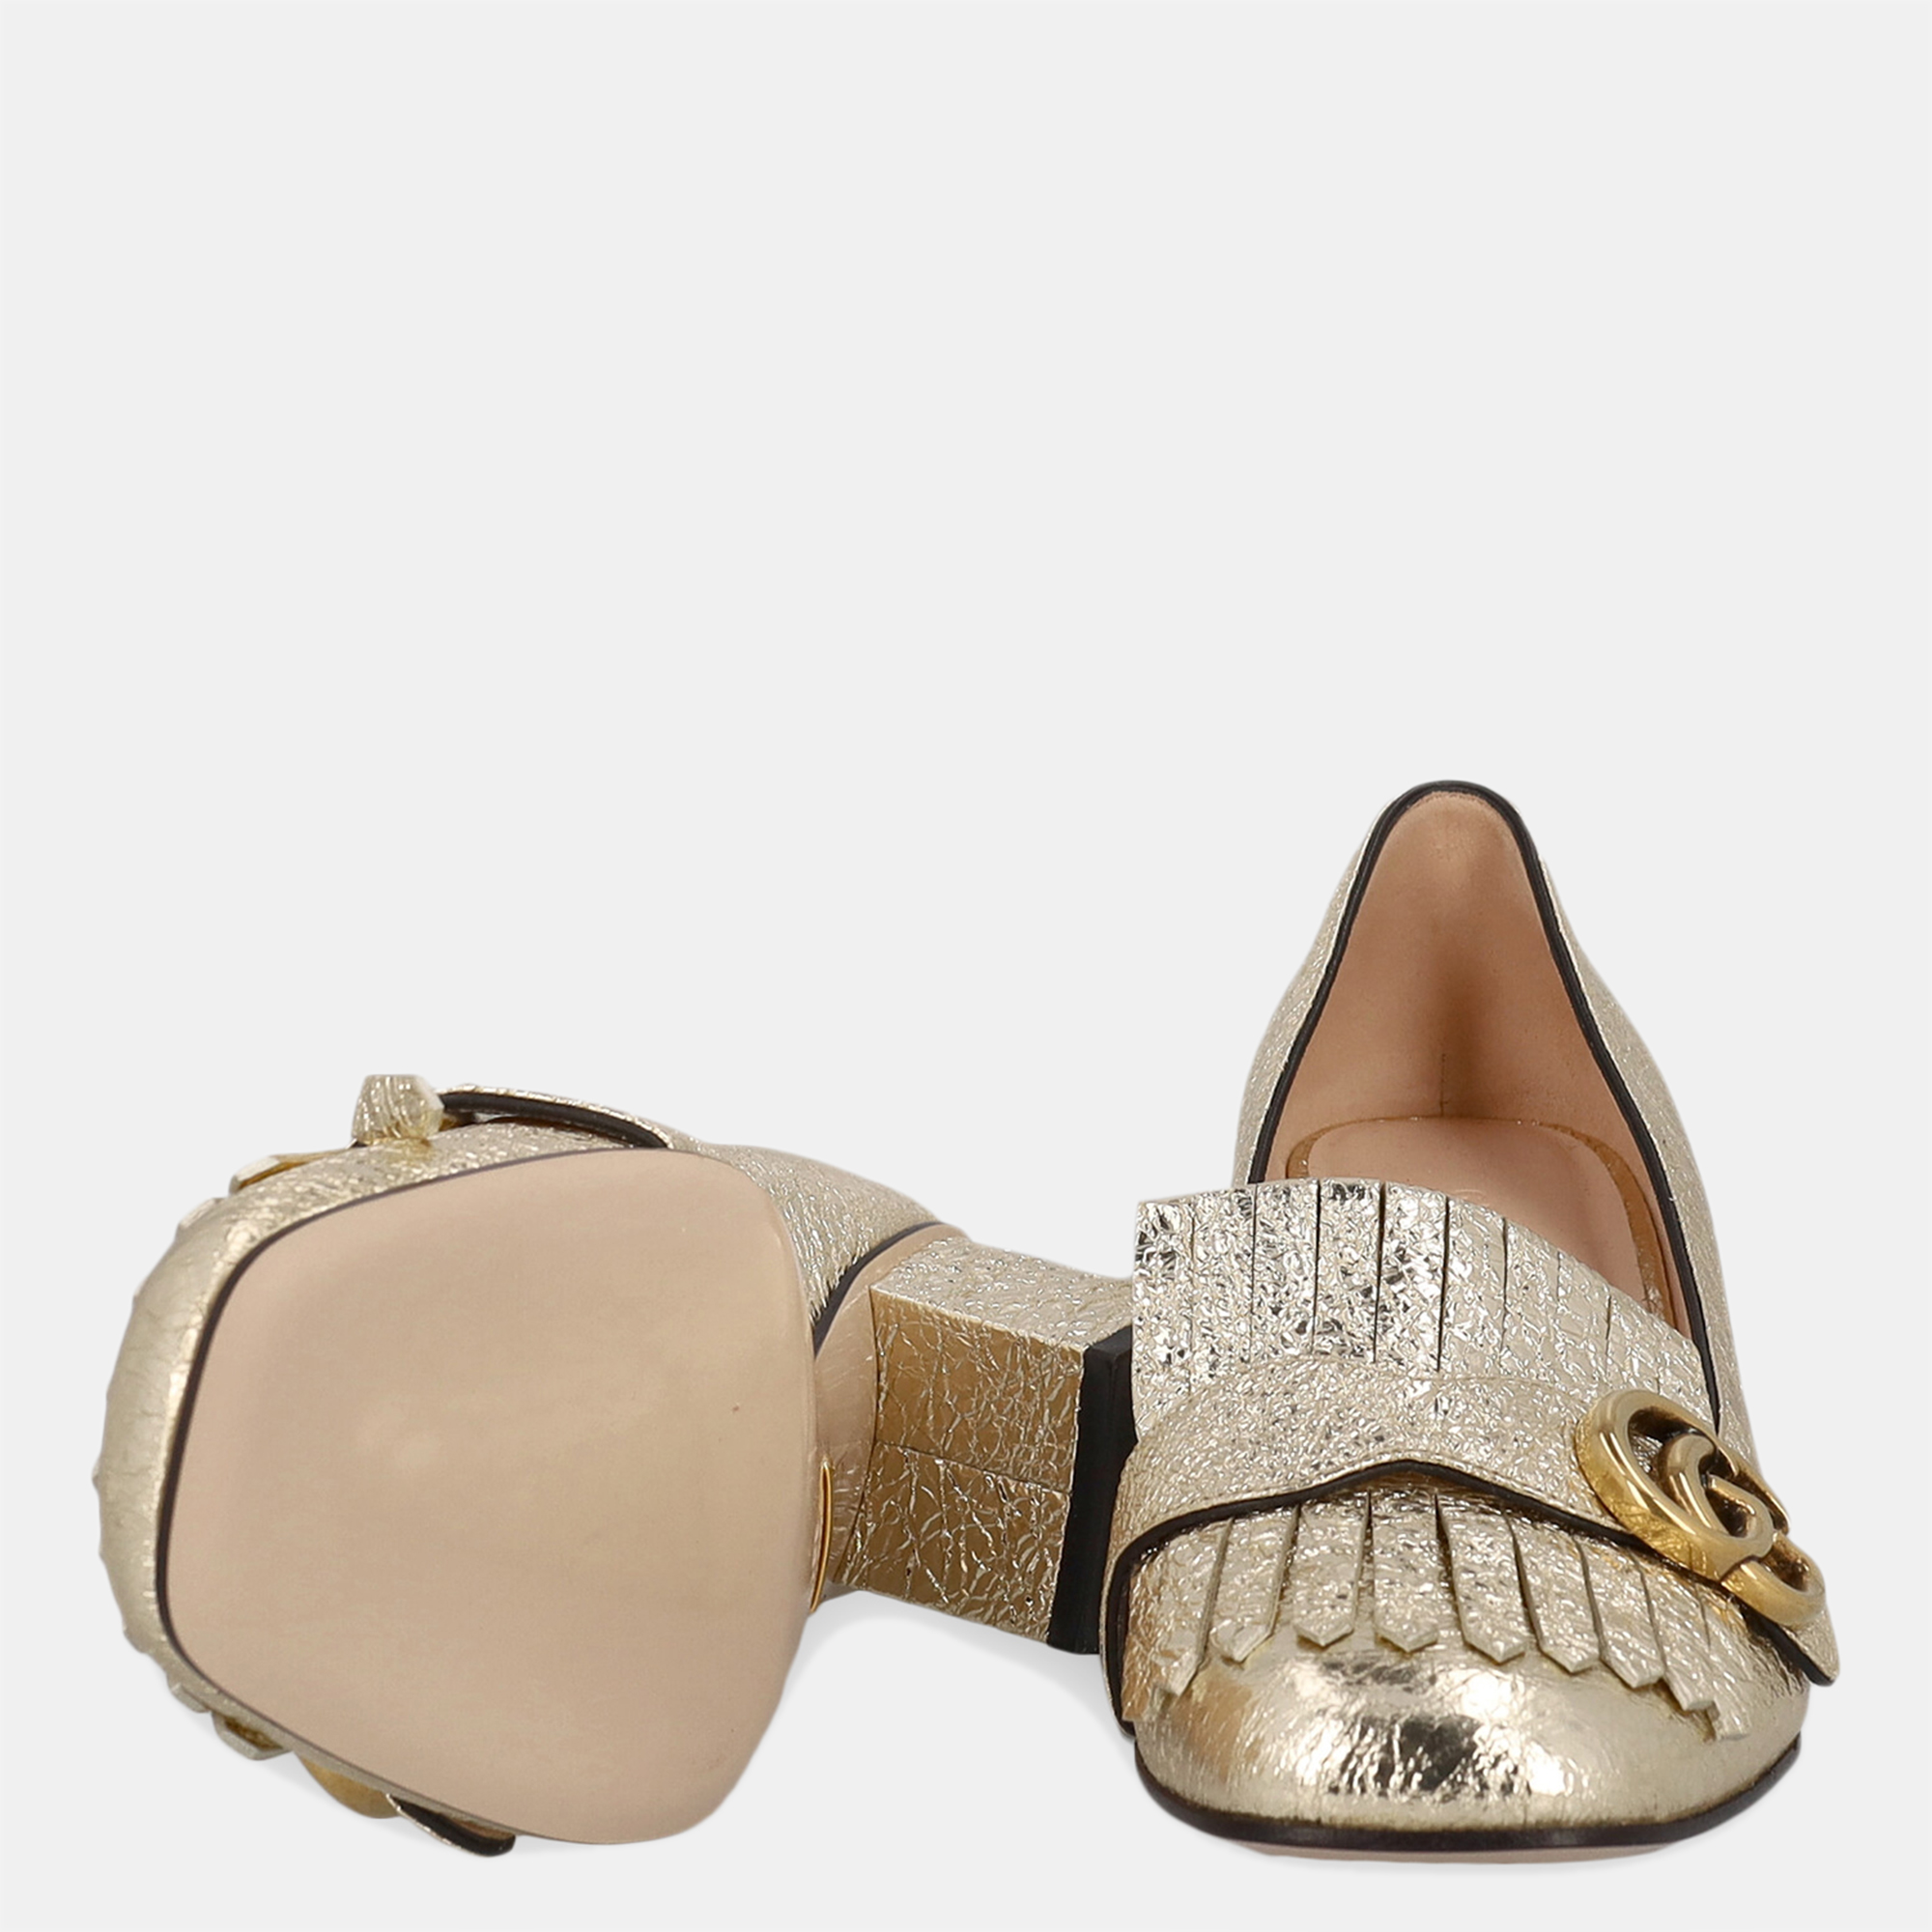 Gucci  Women's Leather Heels - Gold - EU 39.5